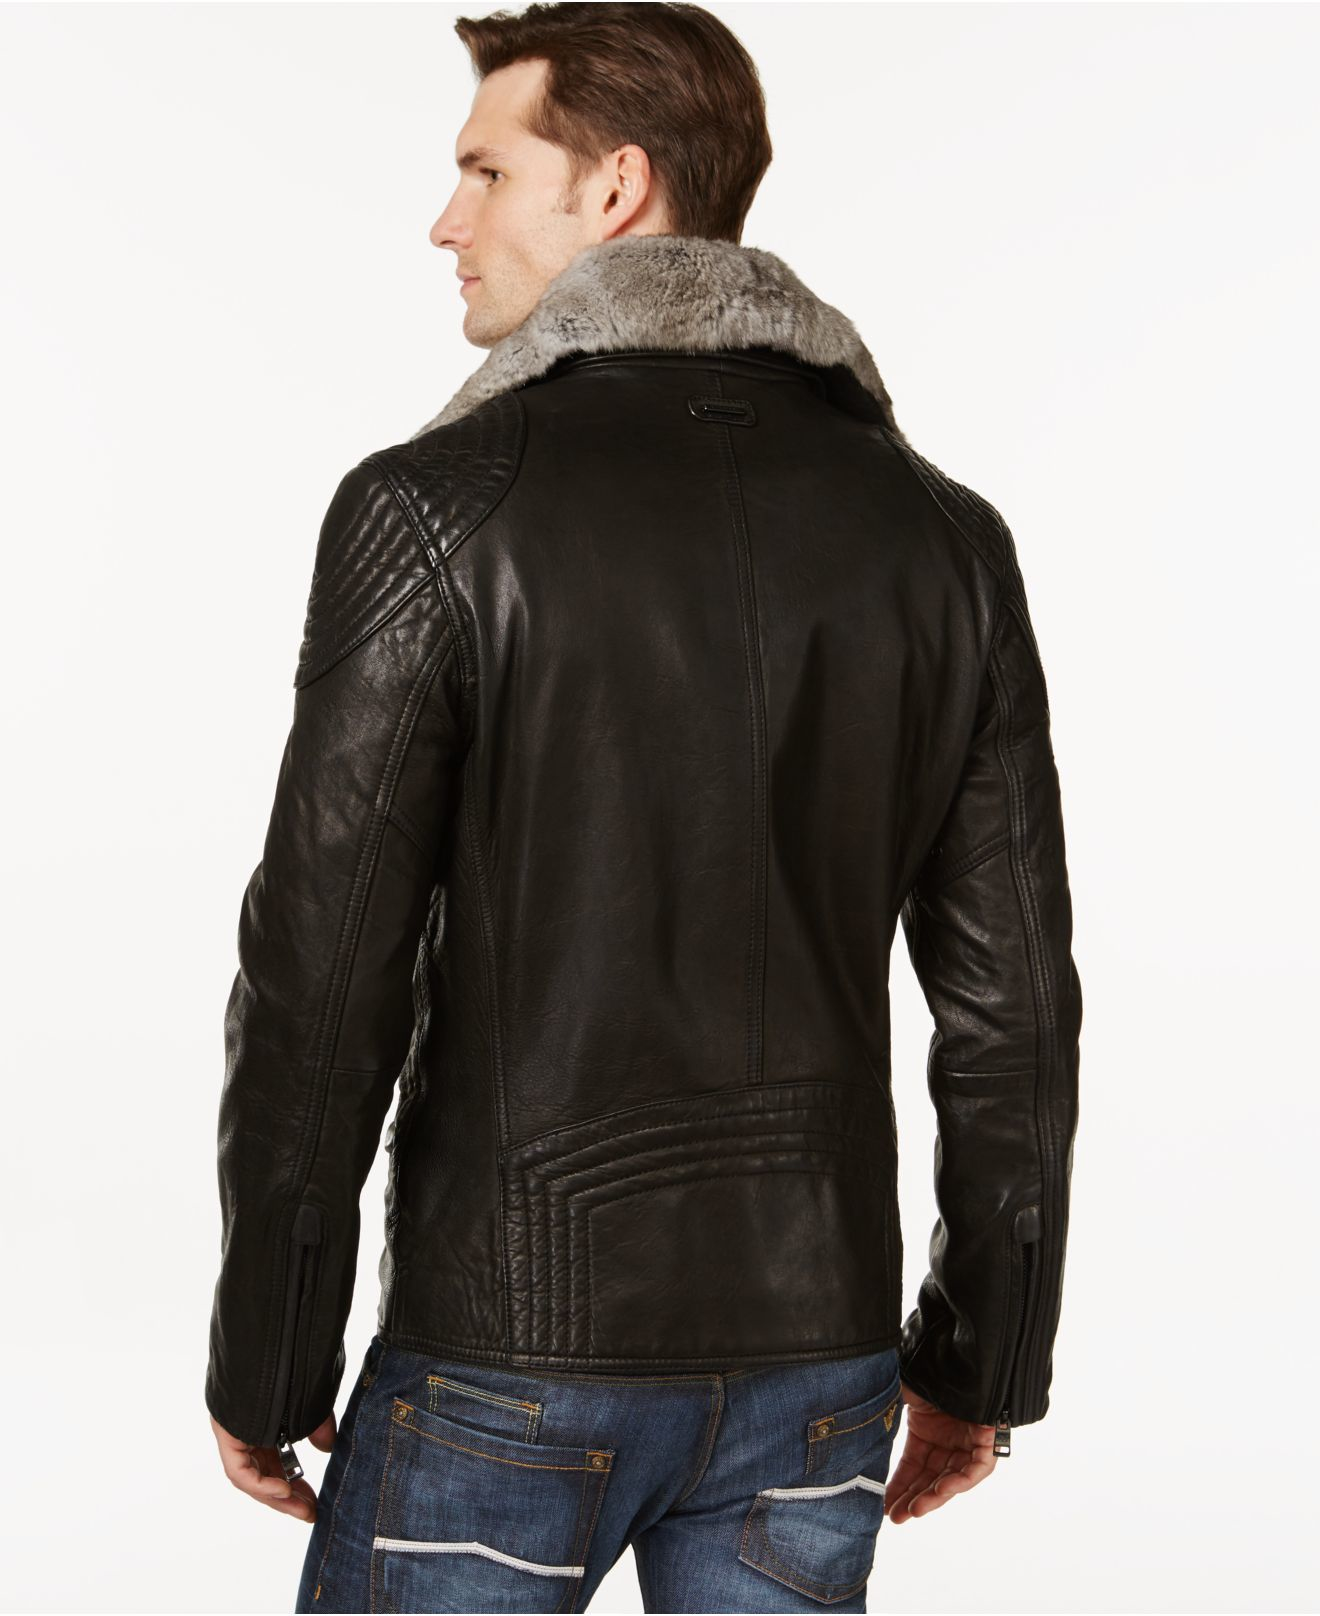 Lyst - Andrew Marc Hawkinge Fur-collar Leather Jacket in Black for Men